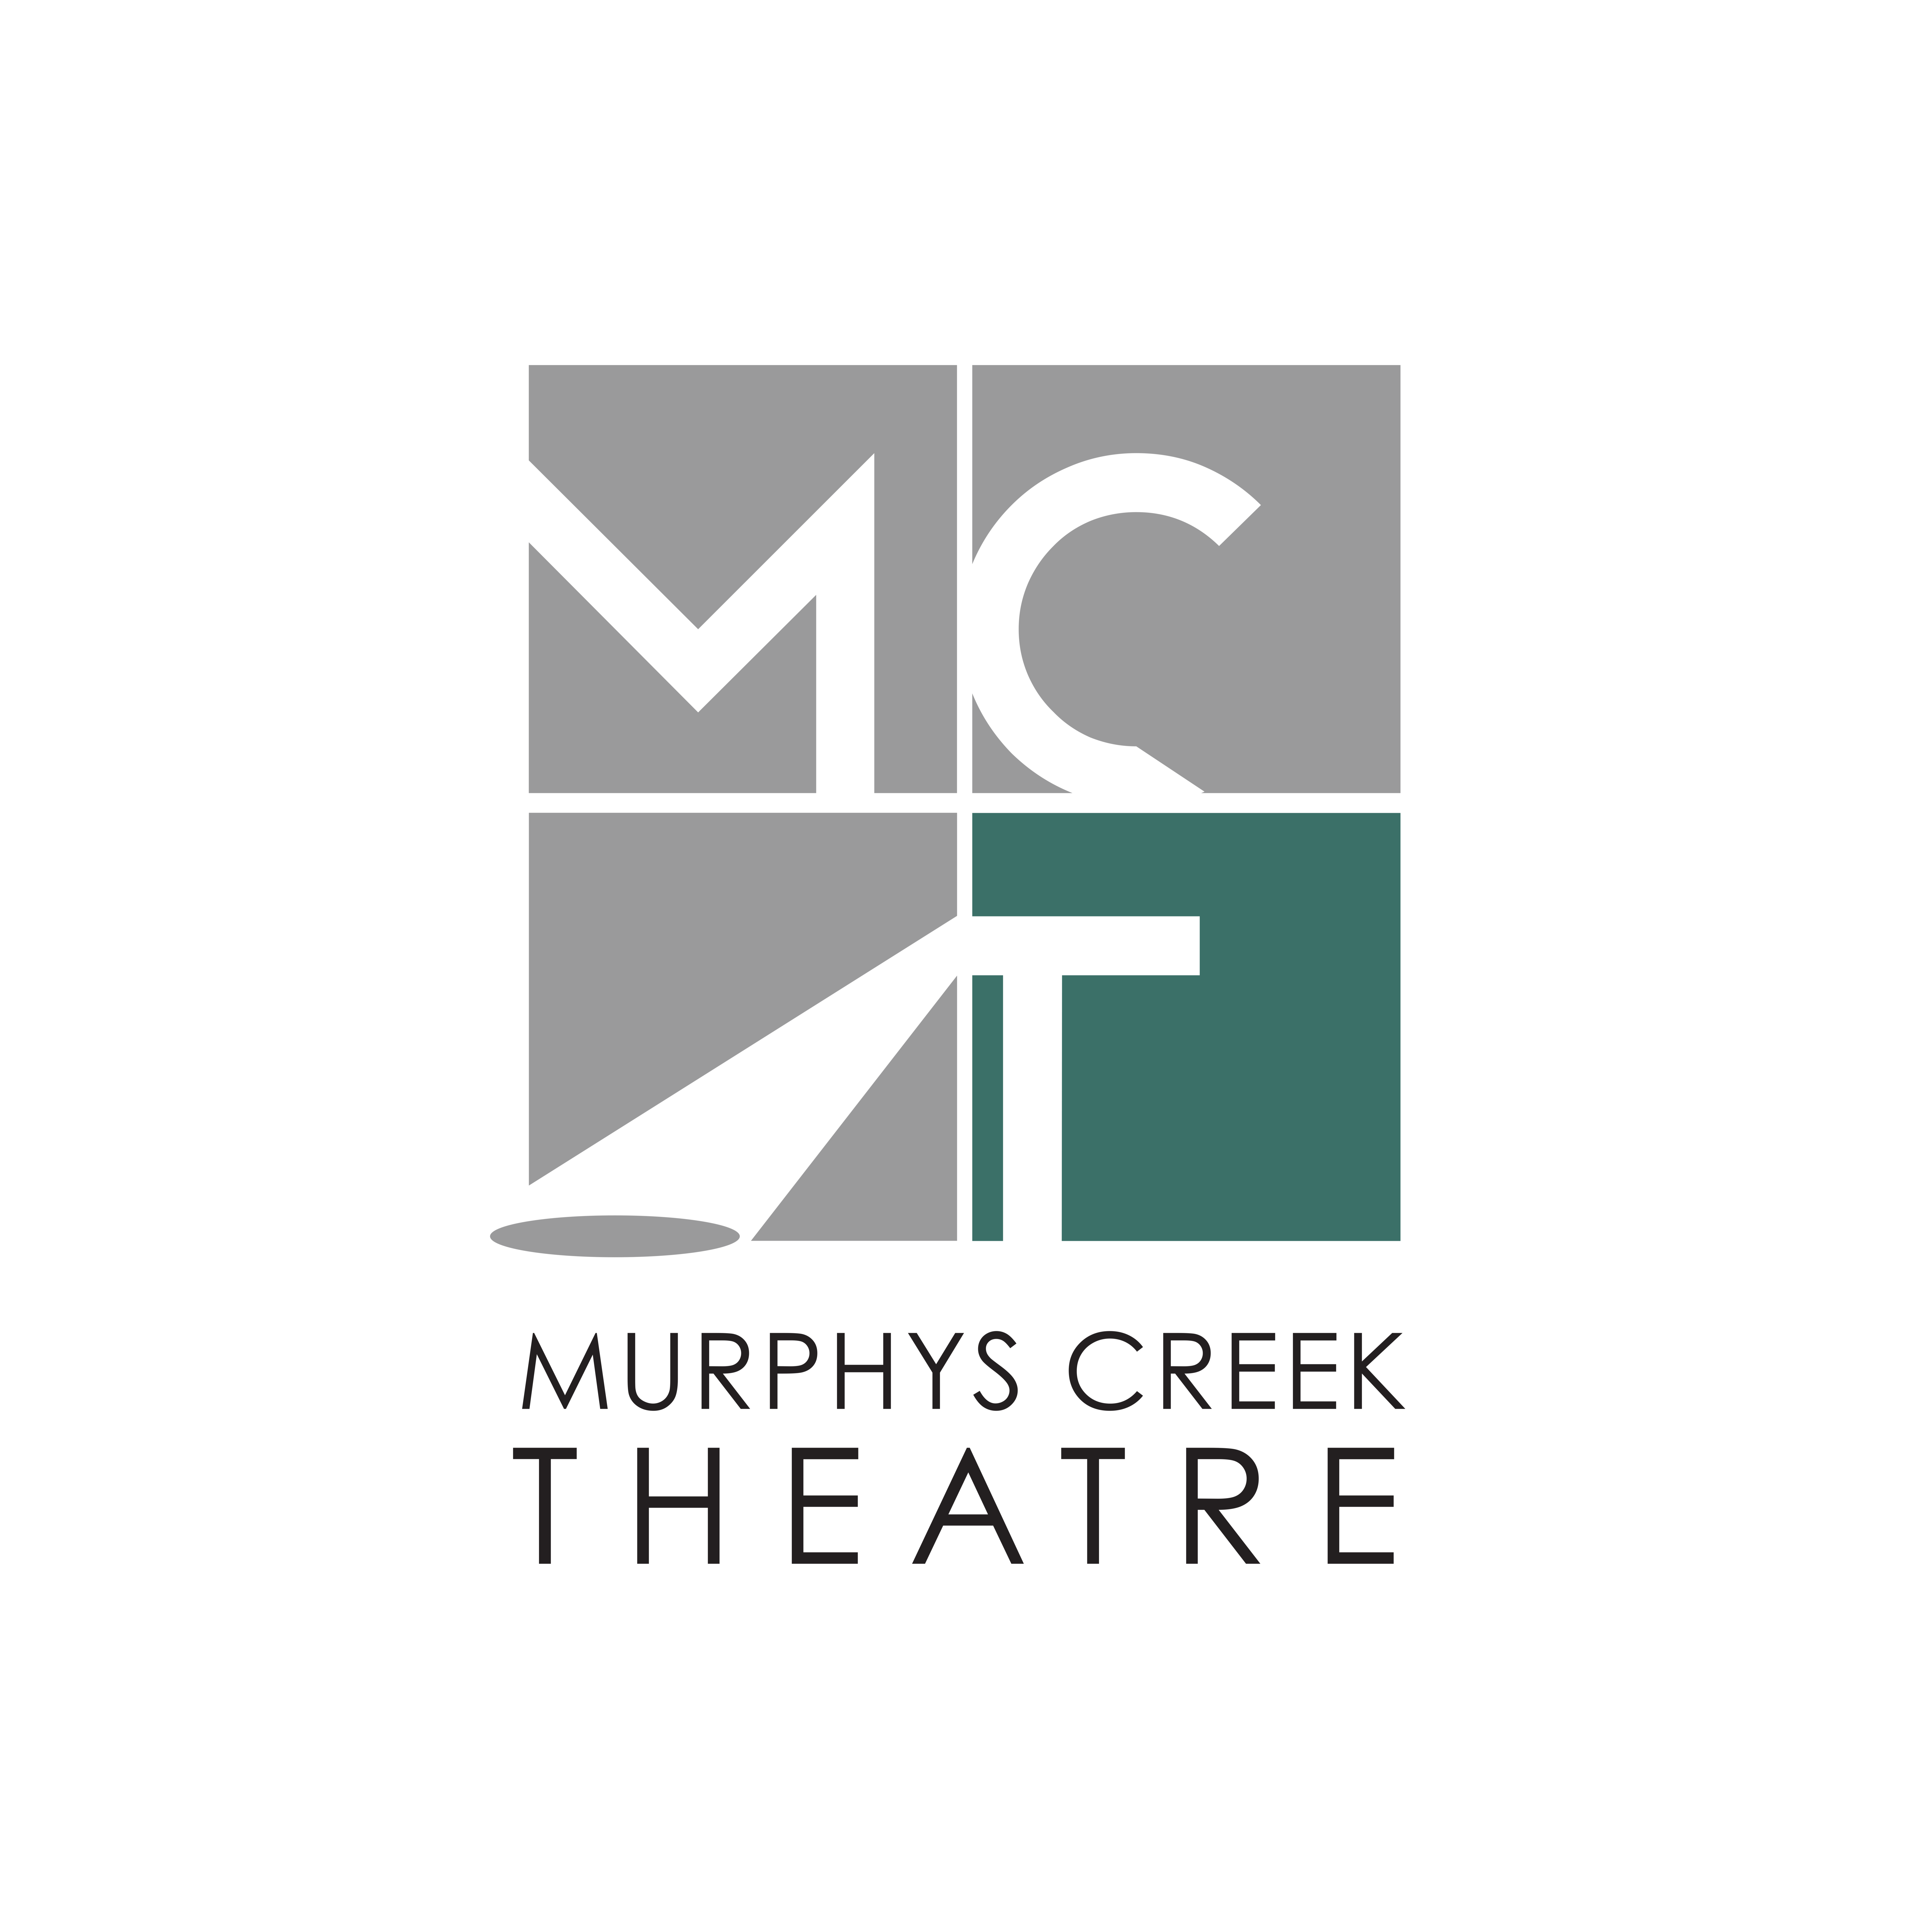 Murphys Creek Theatre logo